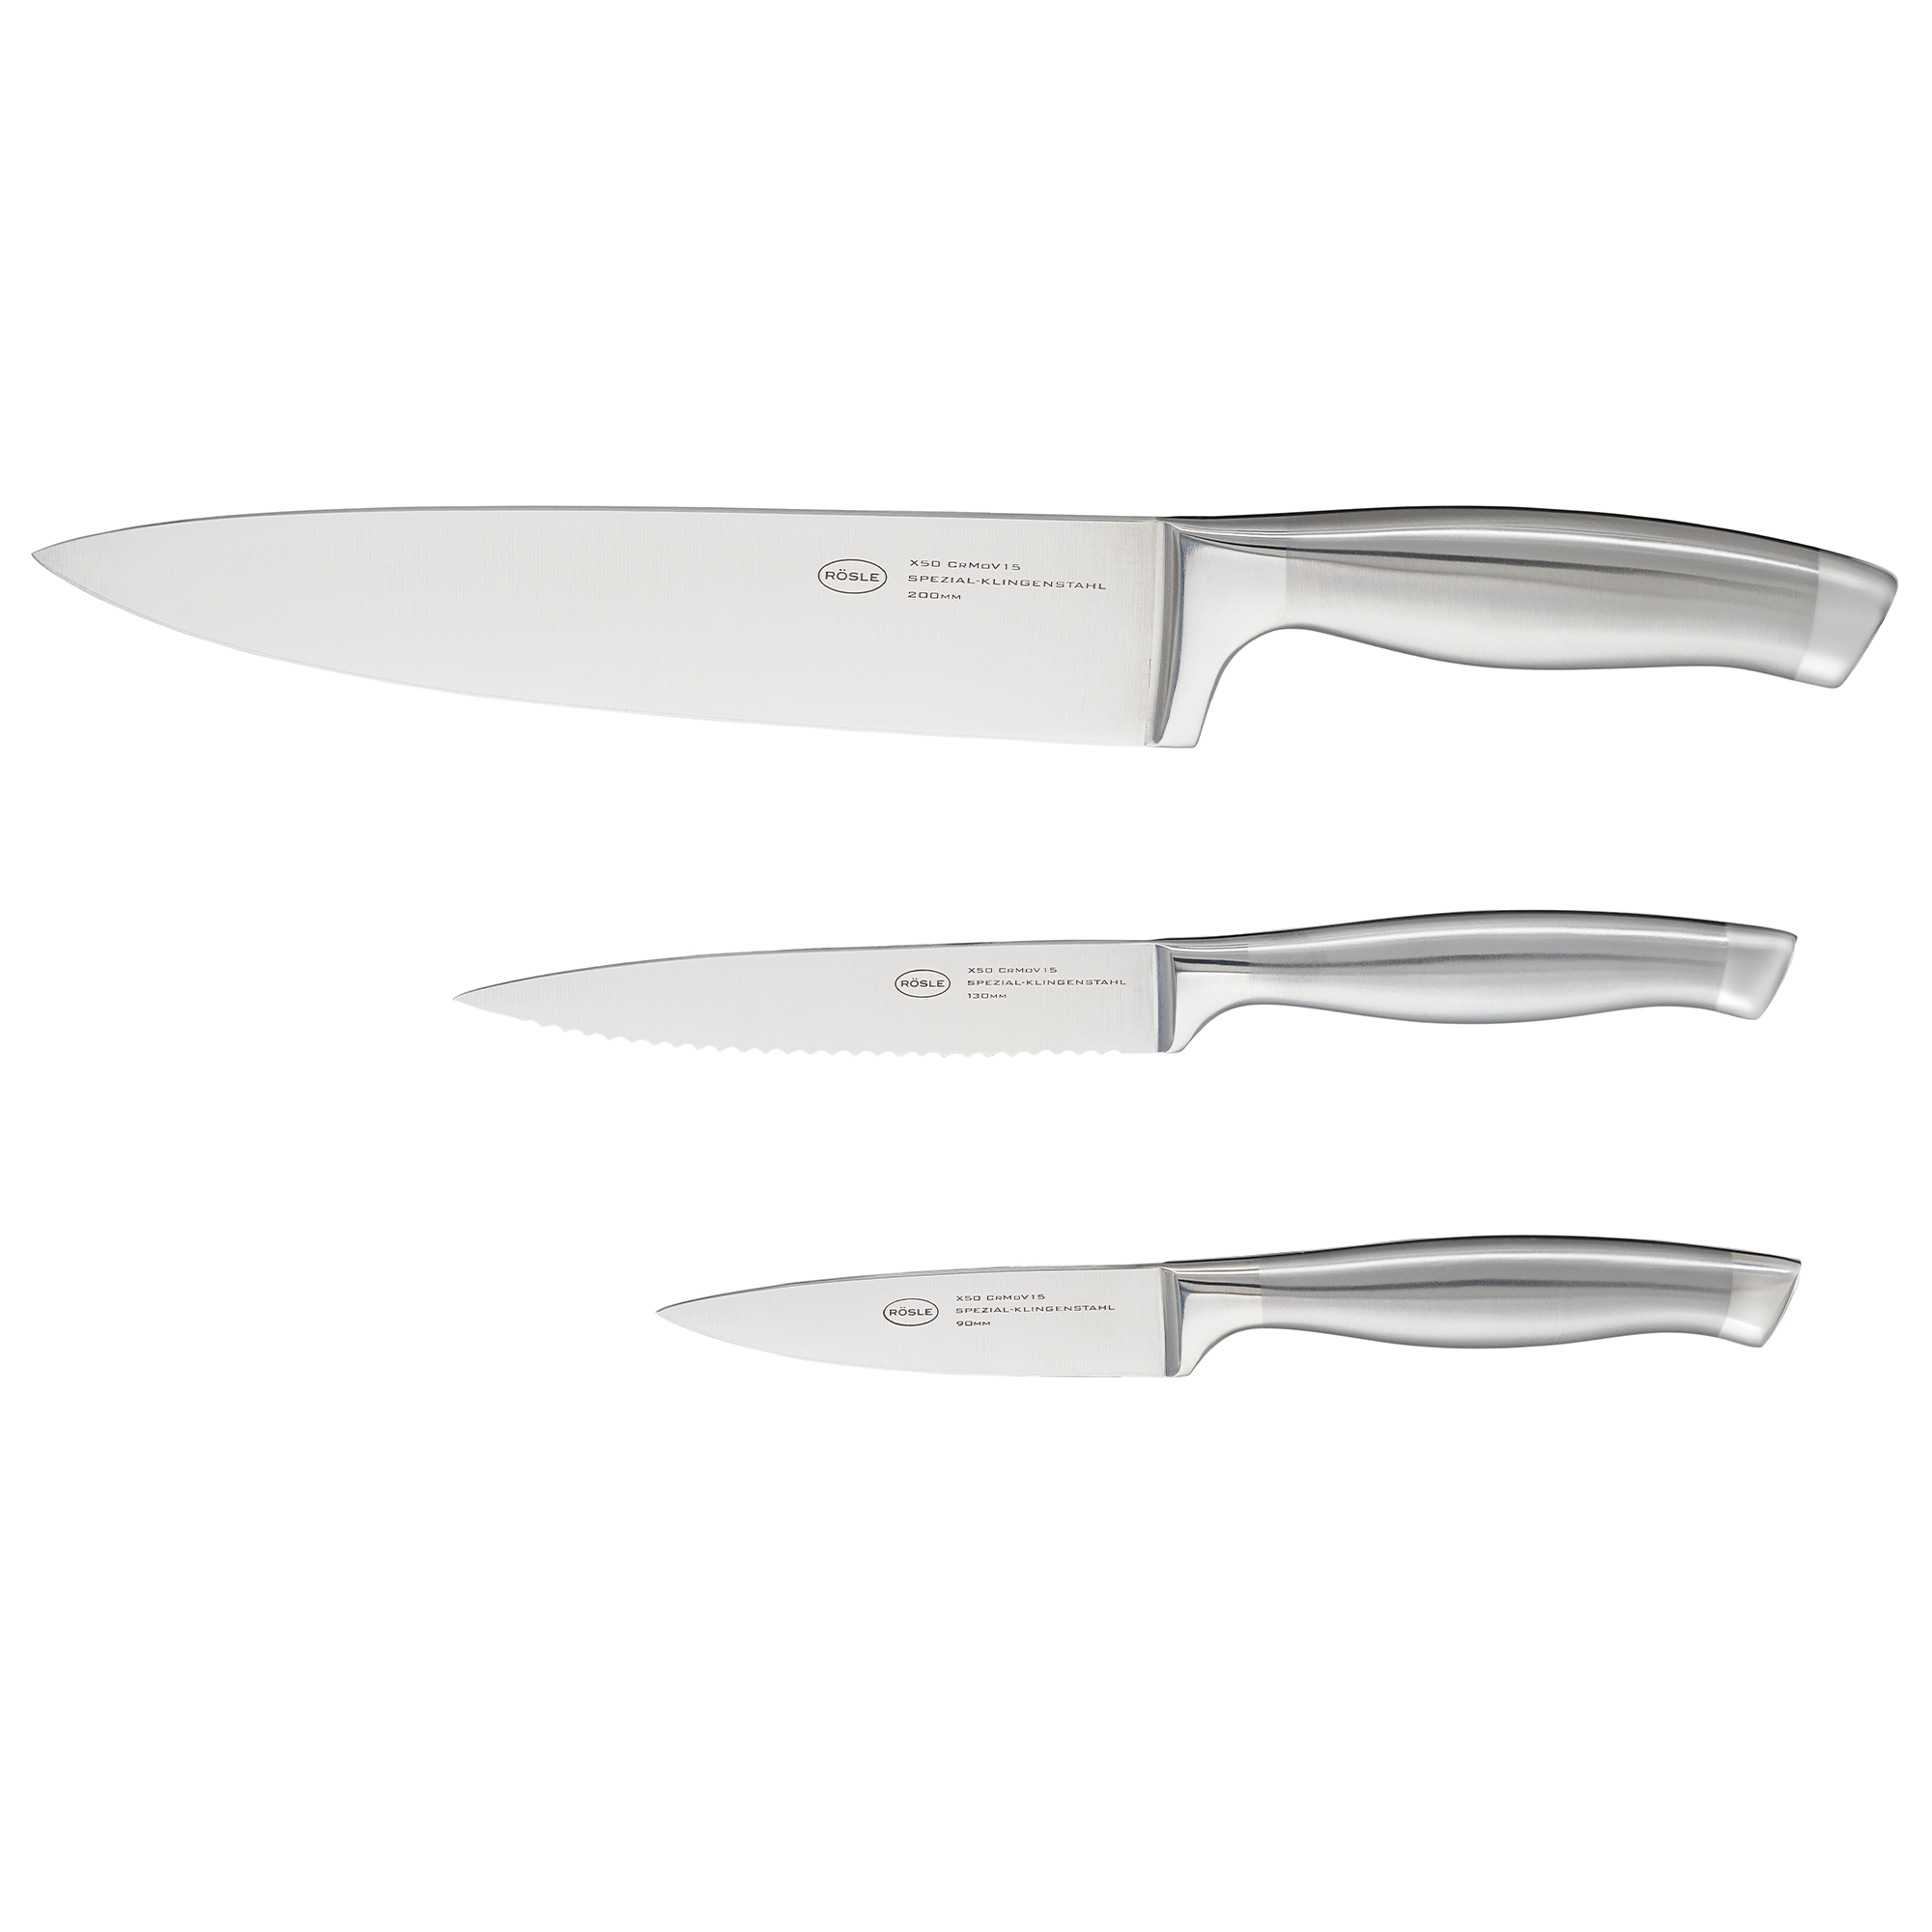 Chef's knife "Basic Line" 20 cm I 8 in.